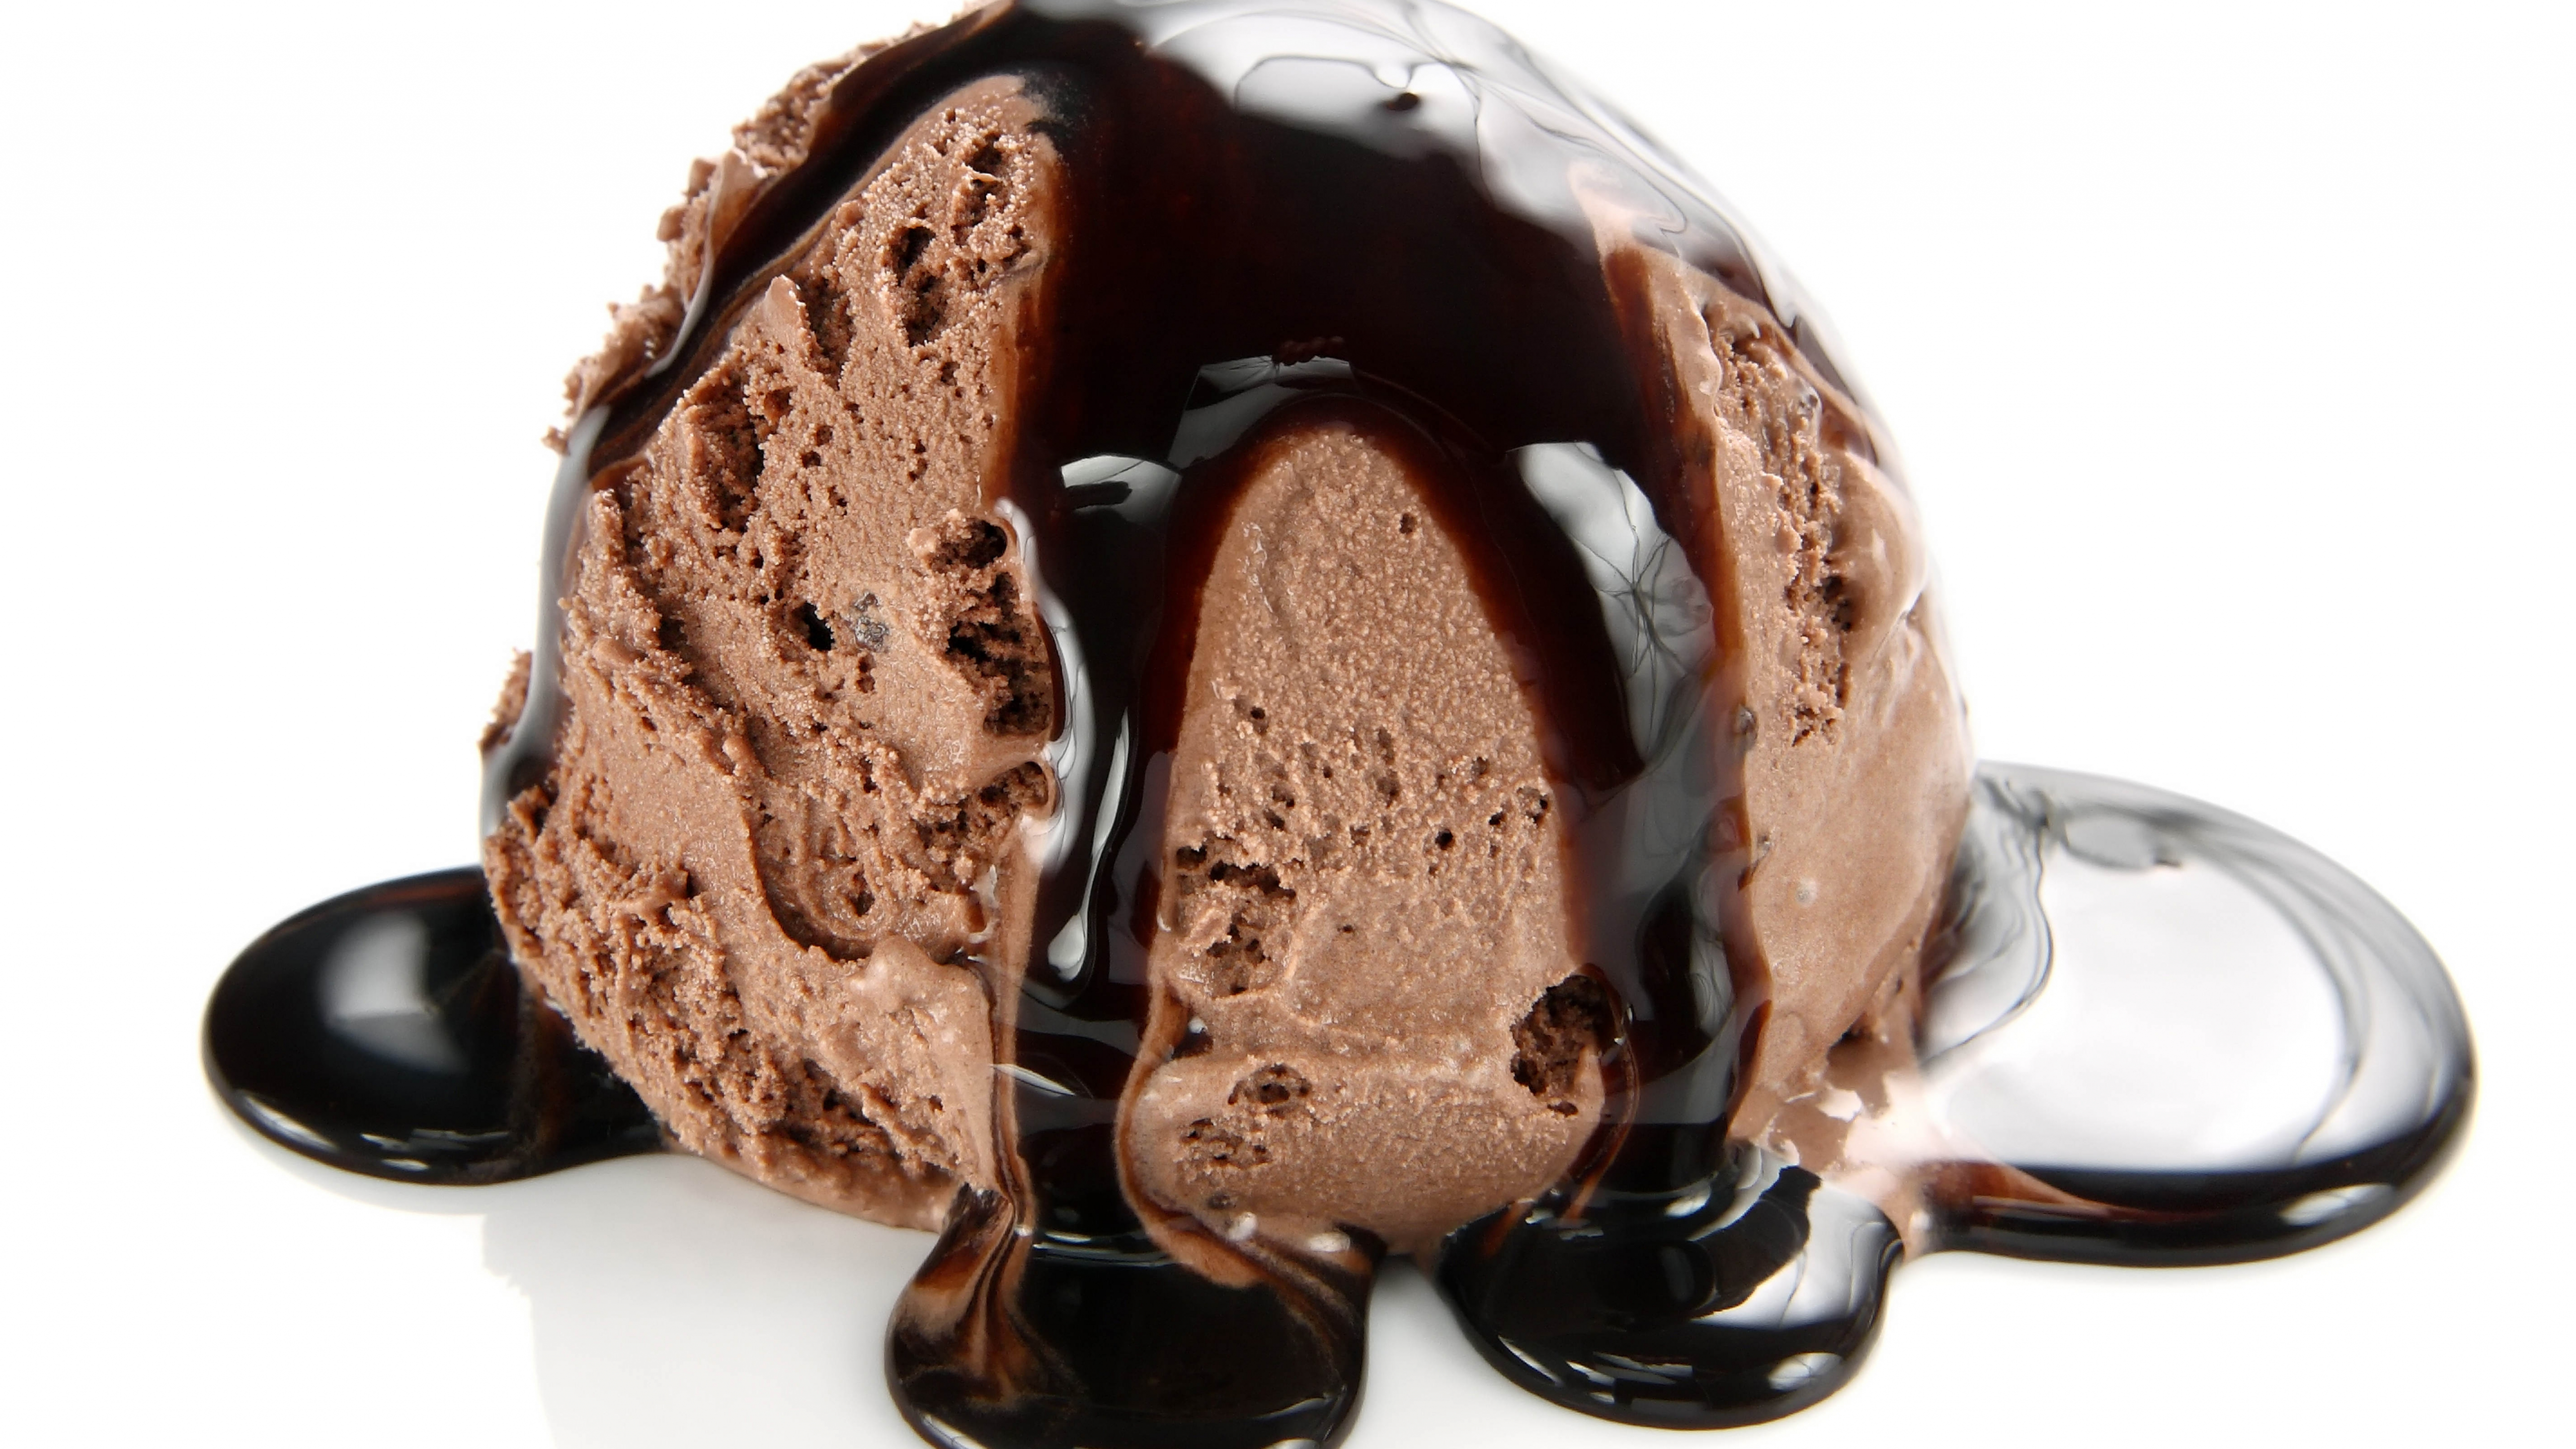 Choco ice. Джелато Шоколато. Шоколадное мороженое. Шарик шоколадного мороженого. Мороженое с шоколадом.